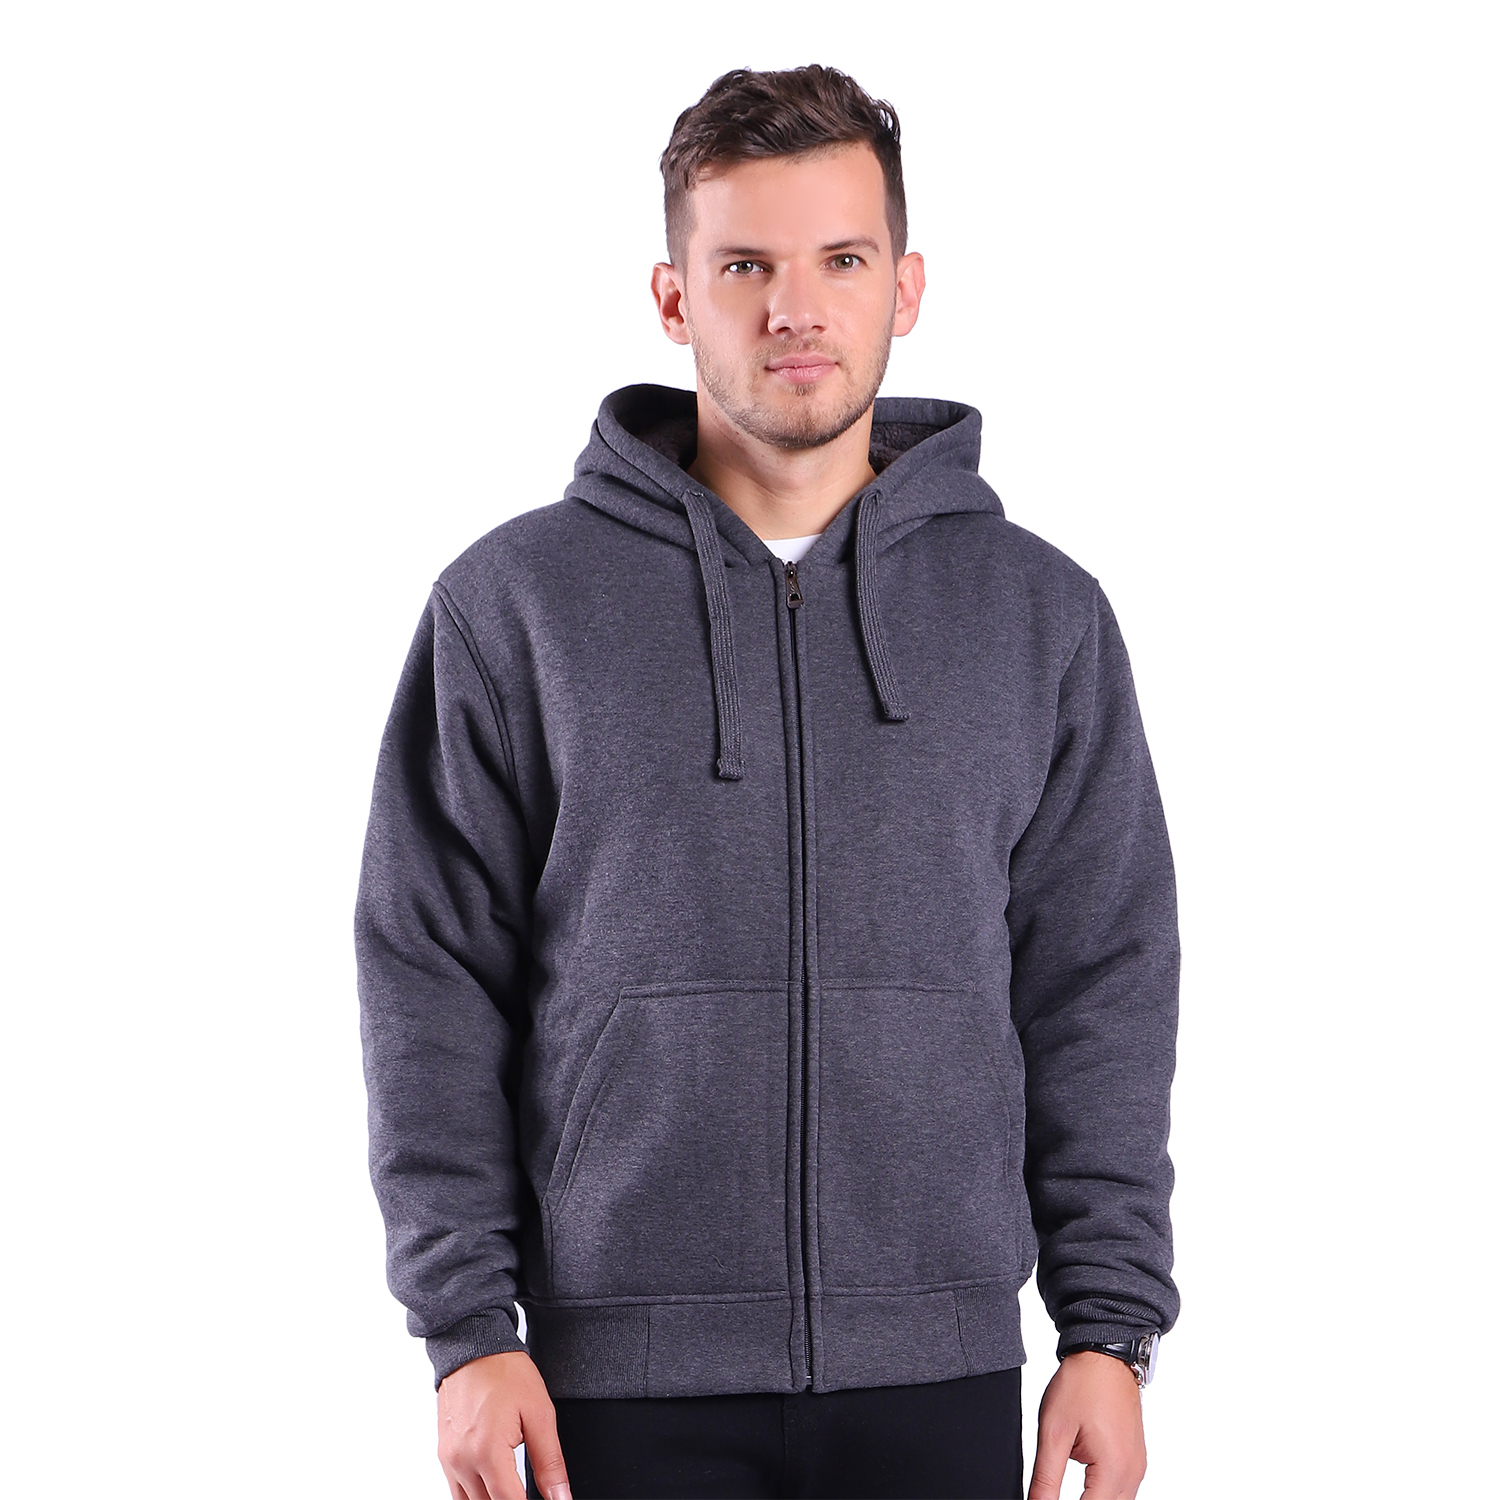 Wholesale Men's Zip Up Hoodies - S-2X, Charcoal, Sherpa Lined